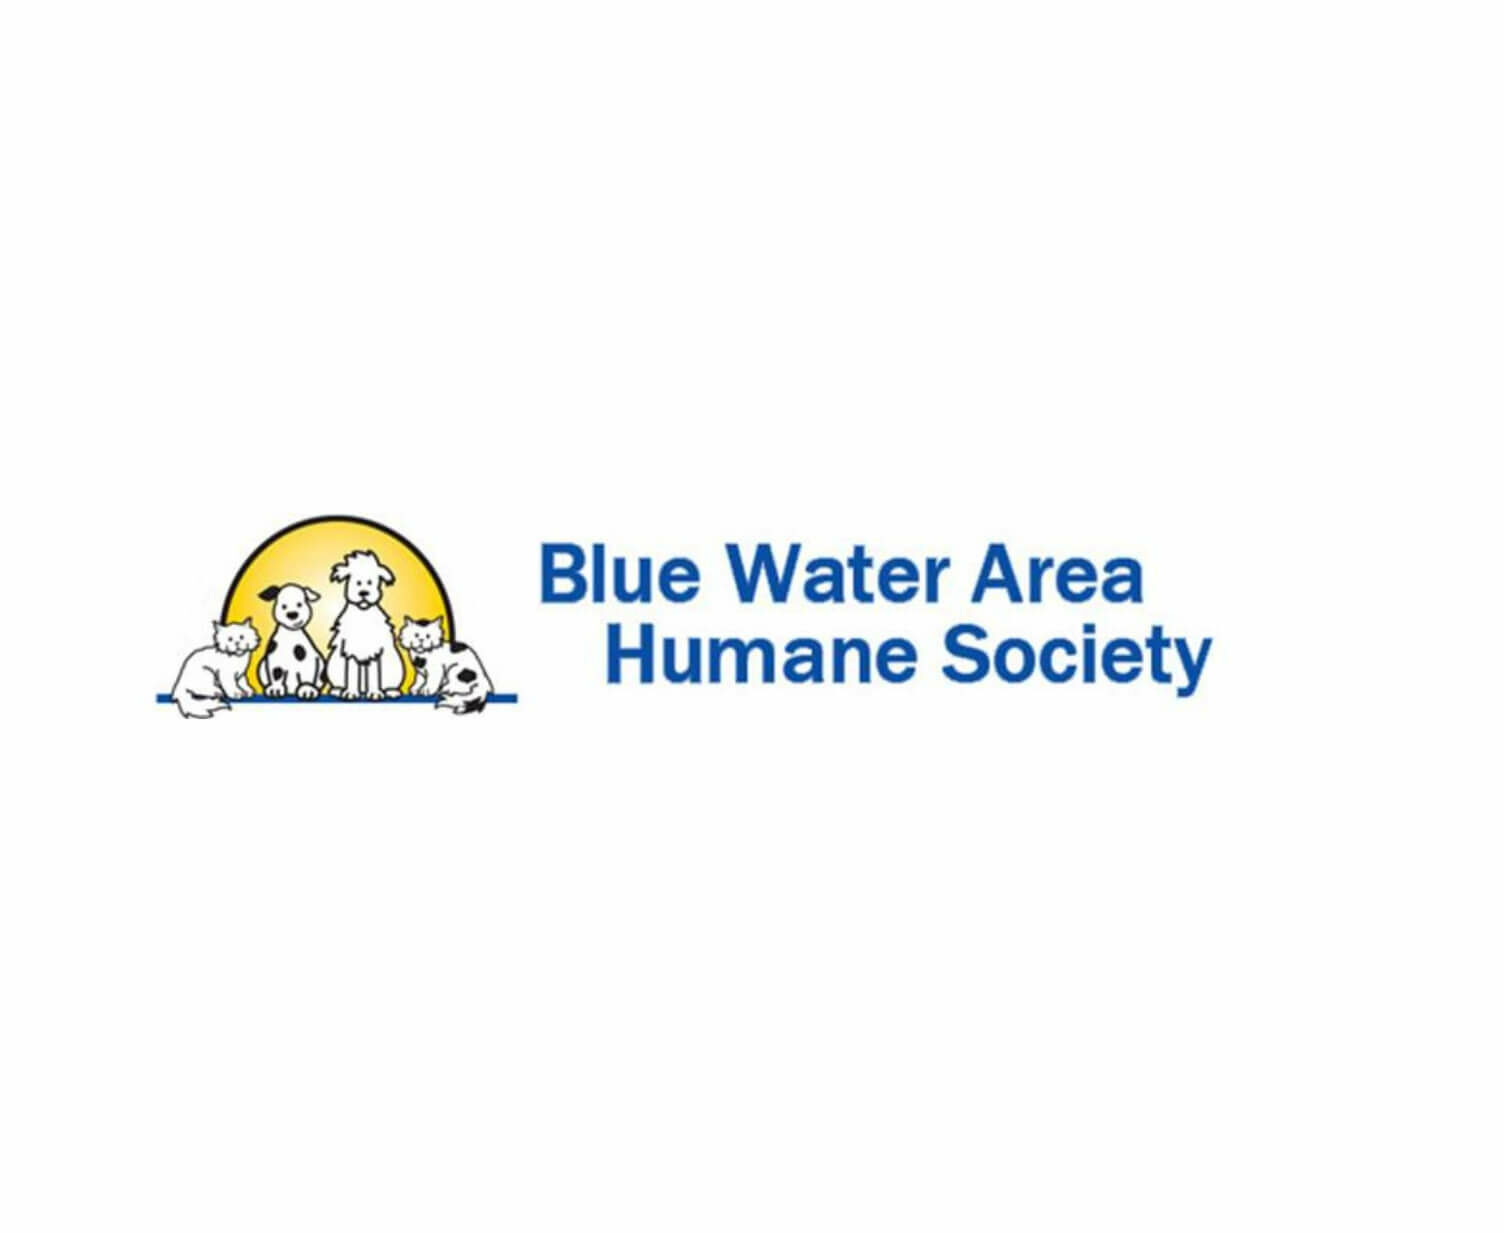 blue water area humane society logo 1